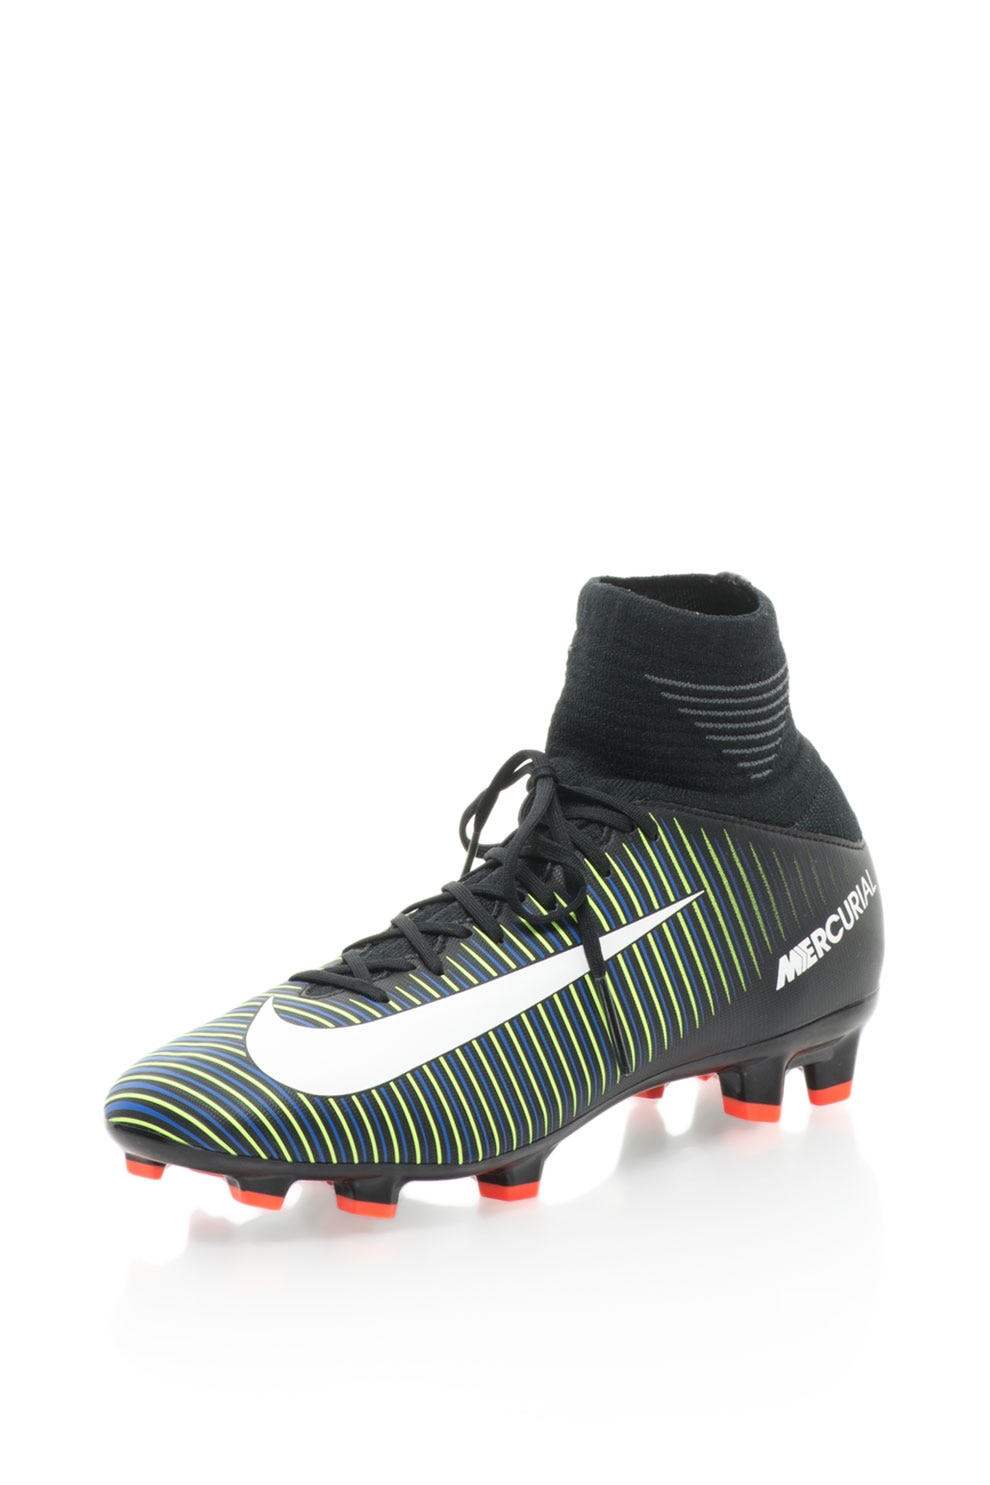 What Aspire Defective Nike, Pantofi cu crampoane pentru fotbal Mercurial Superfly, Negru/Verde,  6Y - eMAG.ro